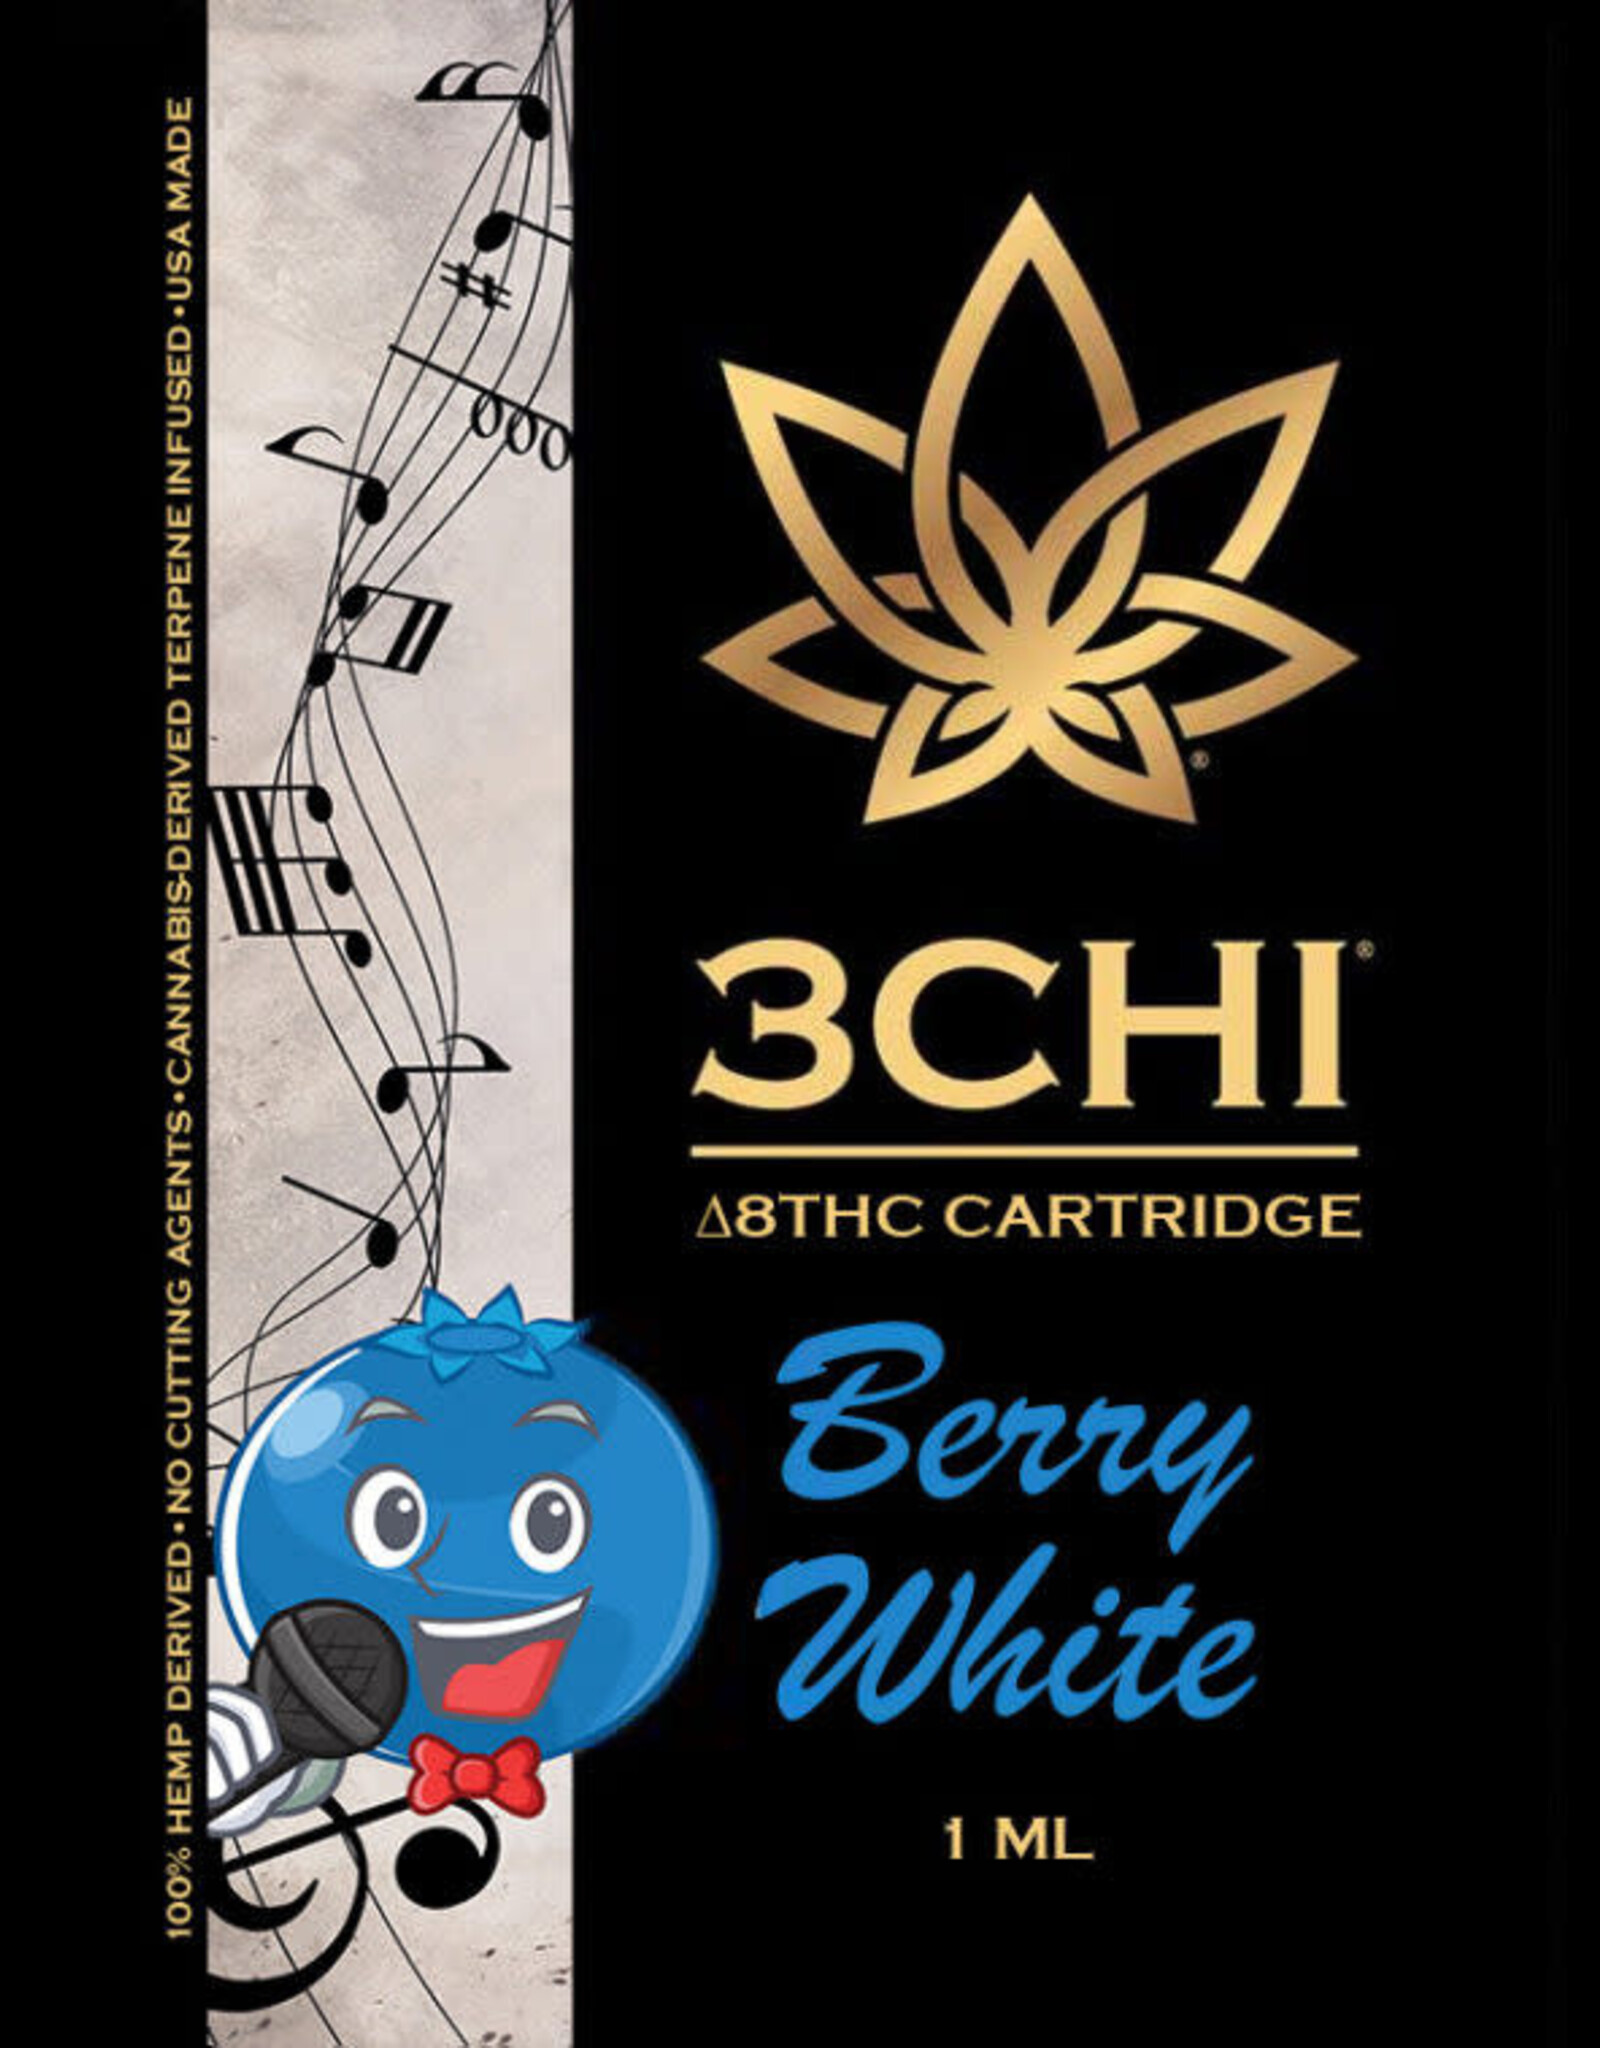 3CHI 3CHI Delta 8 THC Vape Cartridge- Berry white